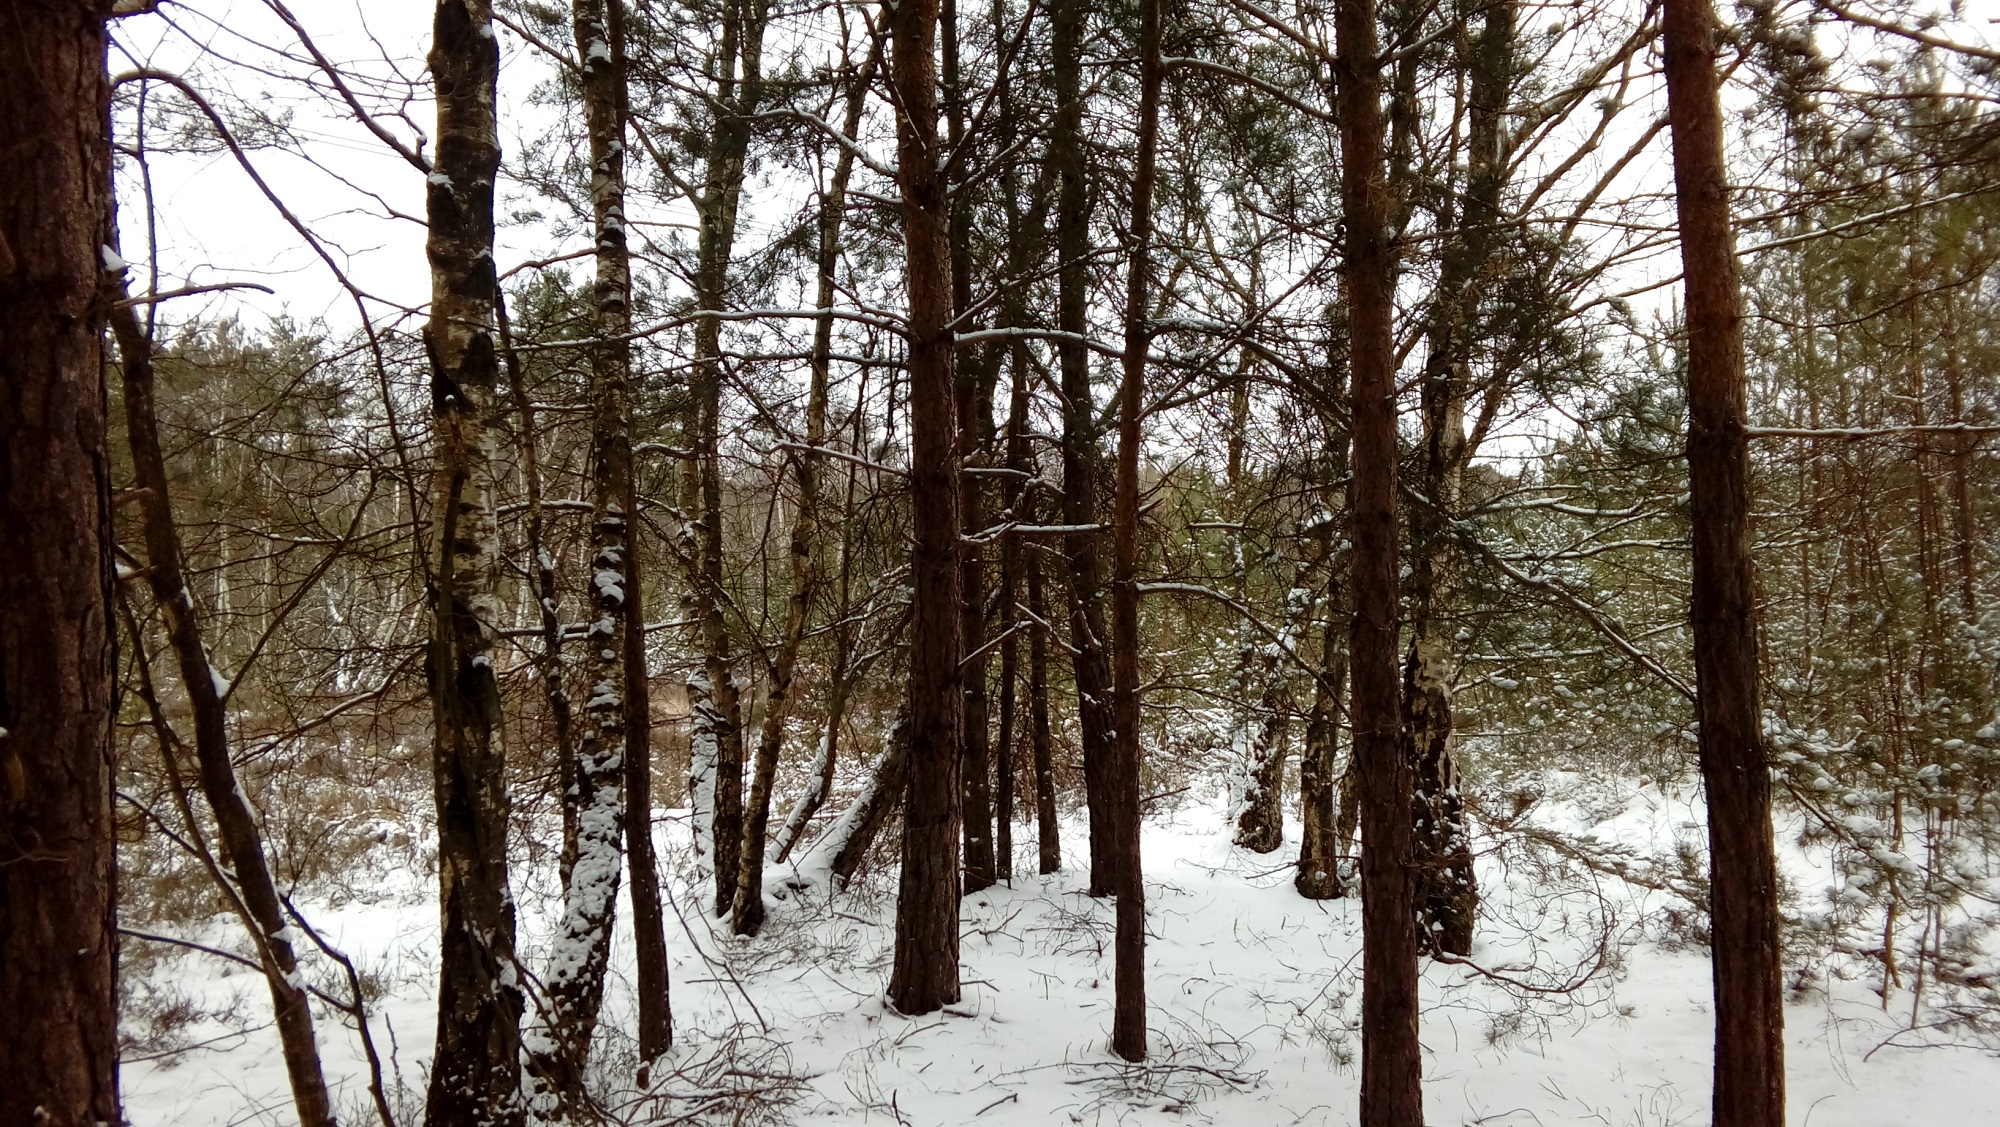 A coniferous woodland area following a winter snowfall